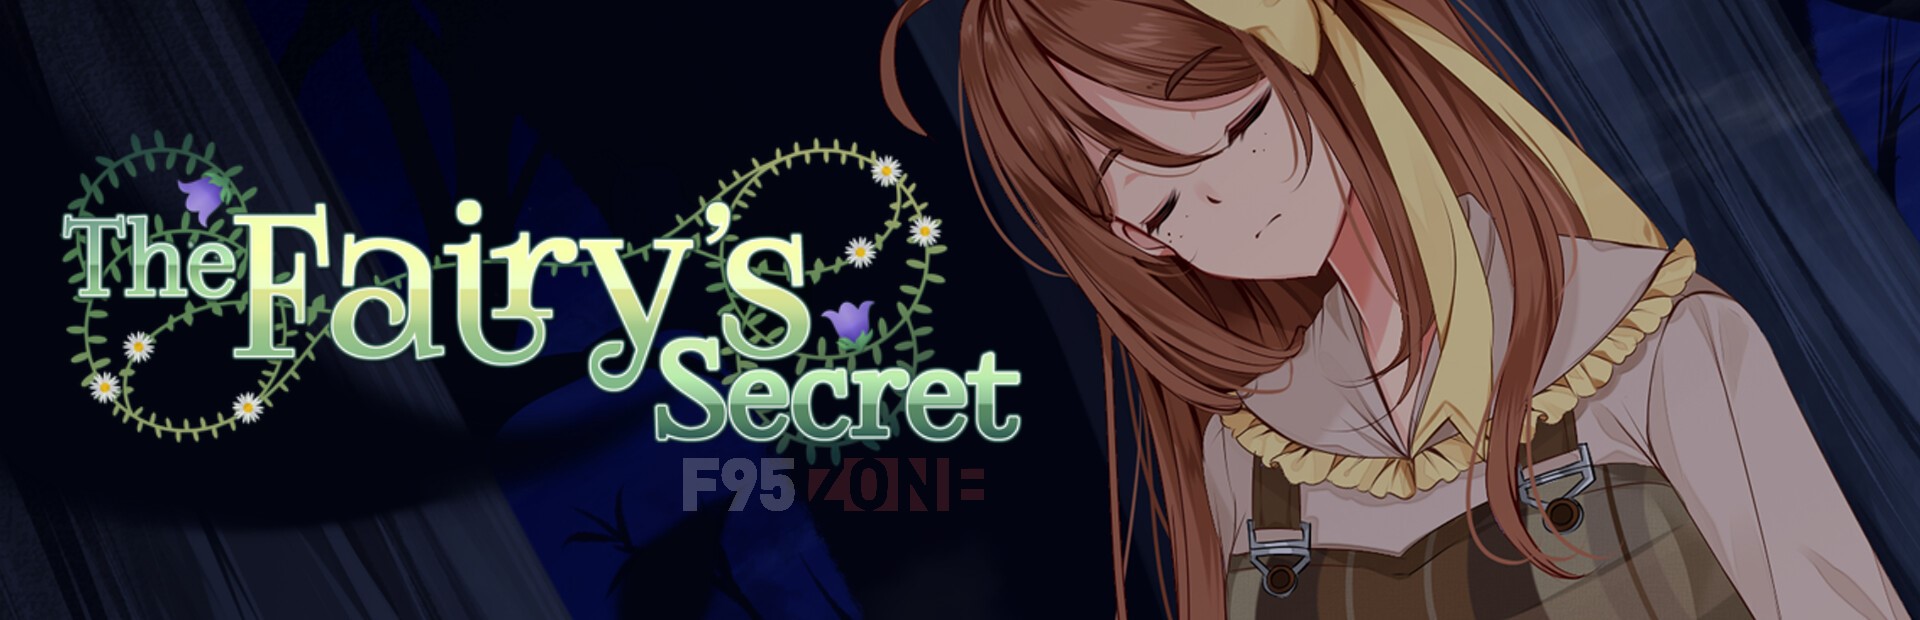 The Fairy's Secret poster